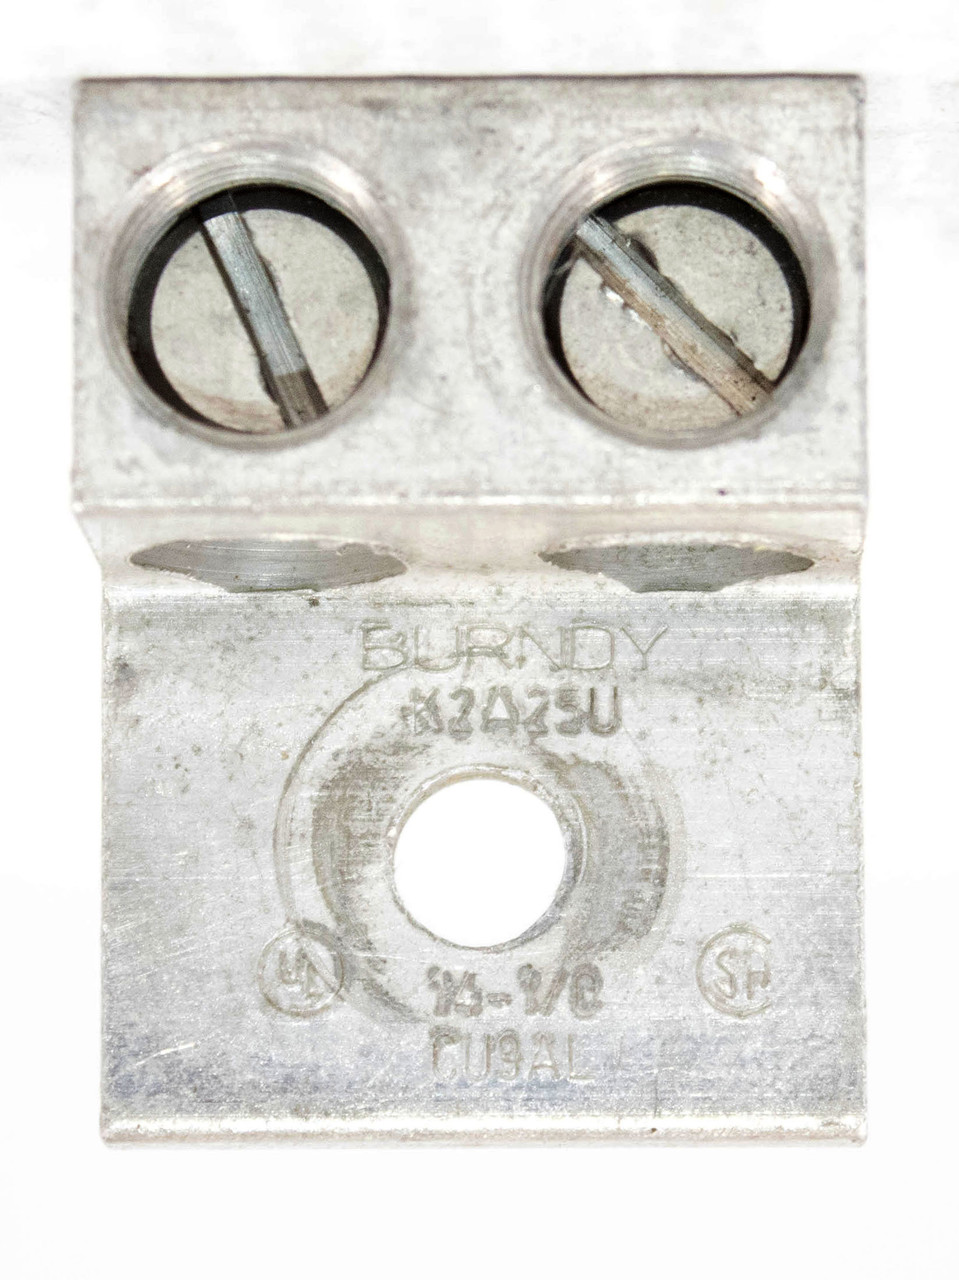 Burndy K2A25U Terminal Lug 1/0-14 2 Conductors 1 Hole